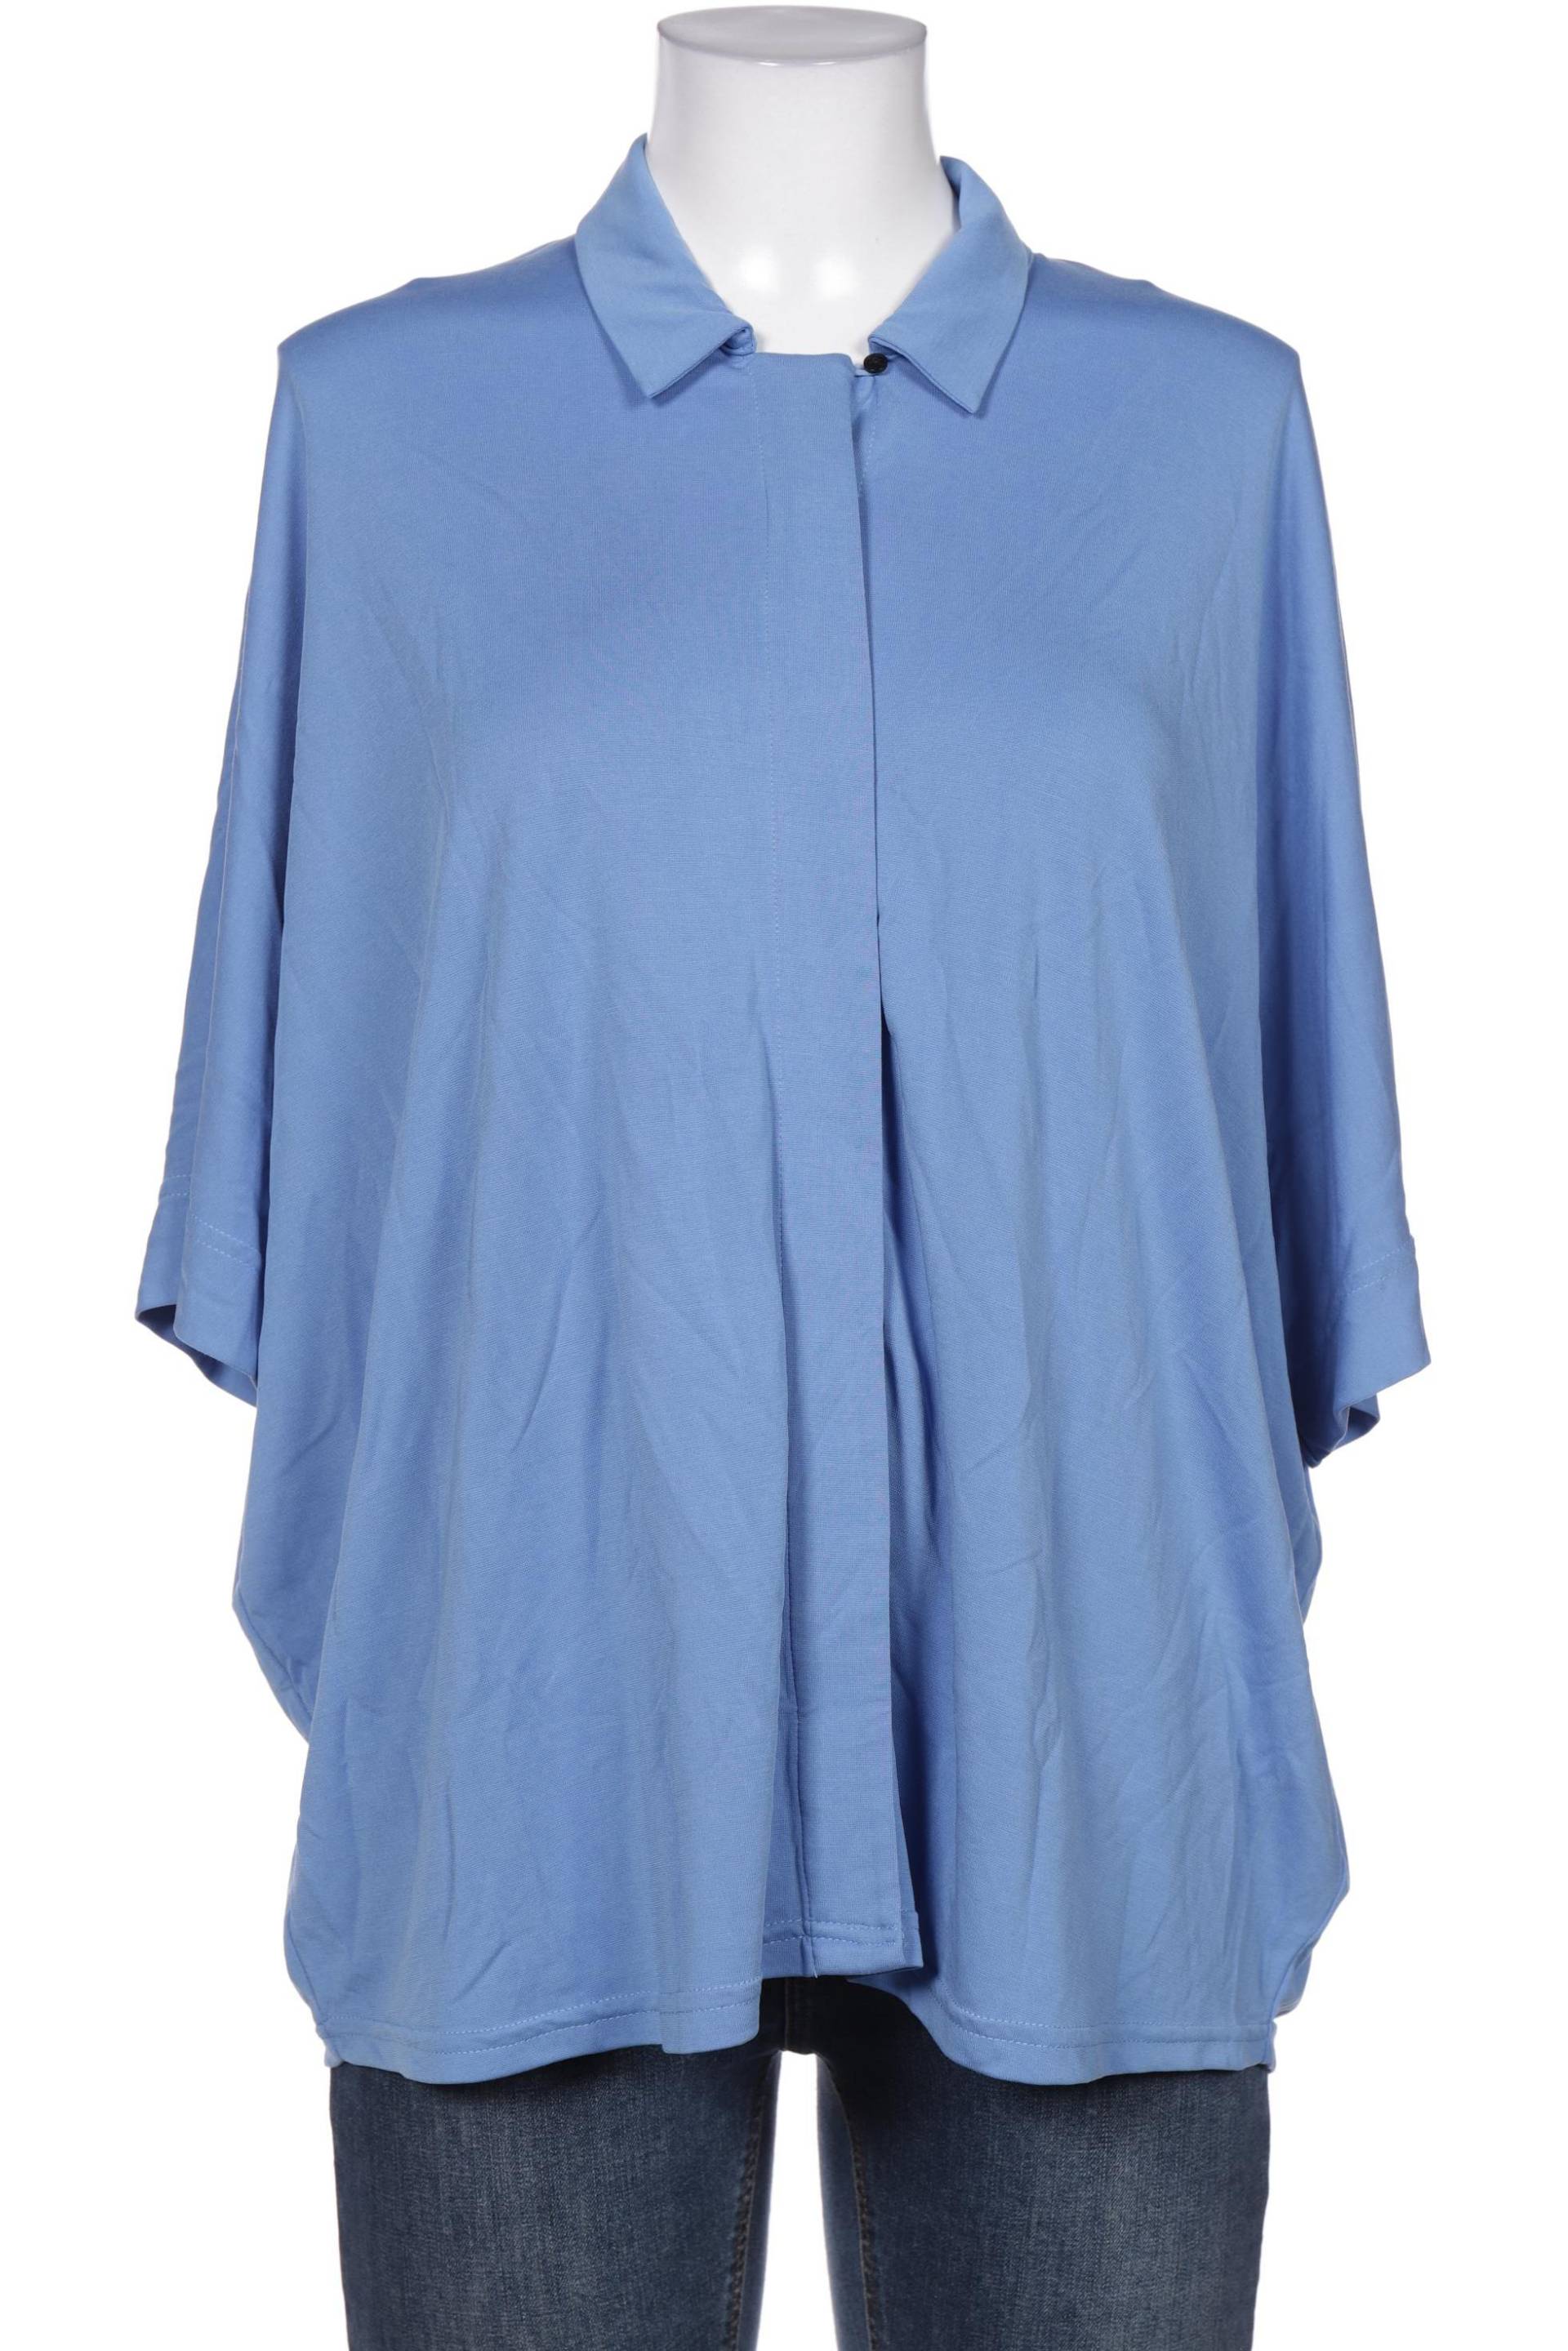 The MASAI Clothing Company Damen Bluse, blau von The MASAI Clothing Company